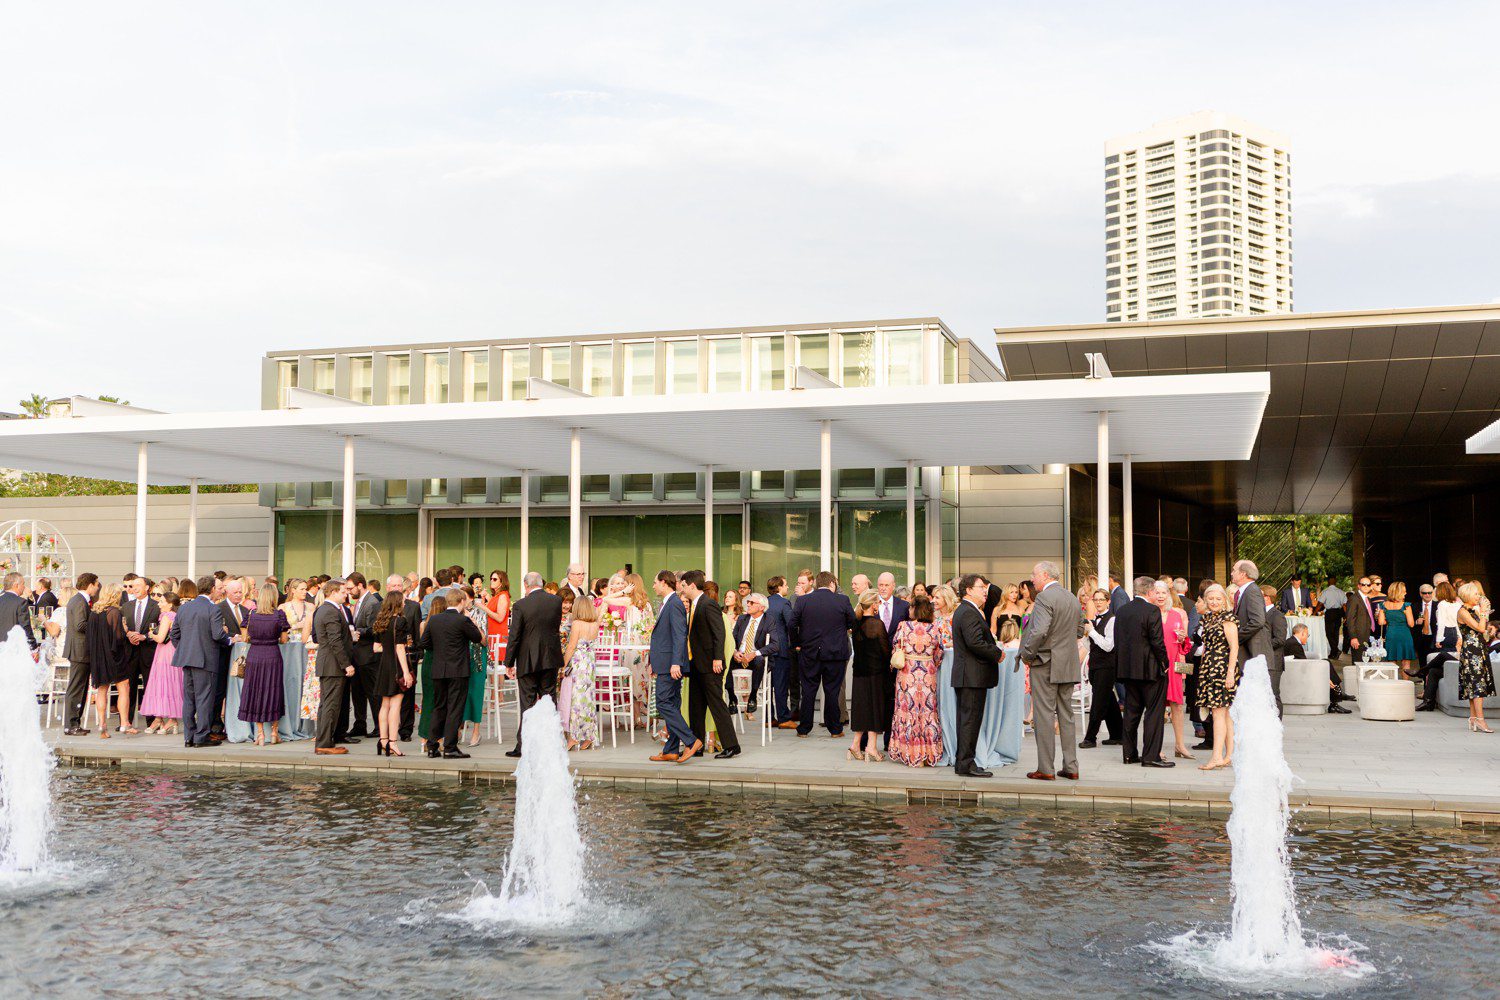 Wedding cocktail hour at McGovern Centennial Gardens in Houston.